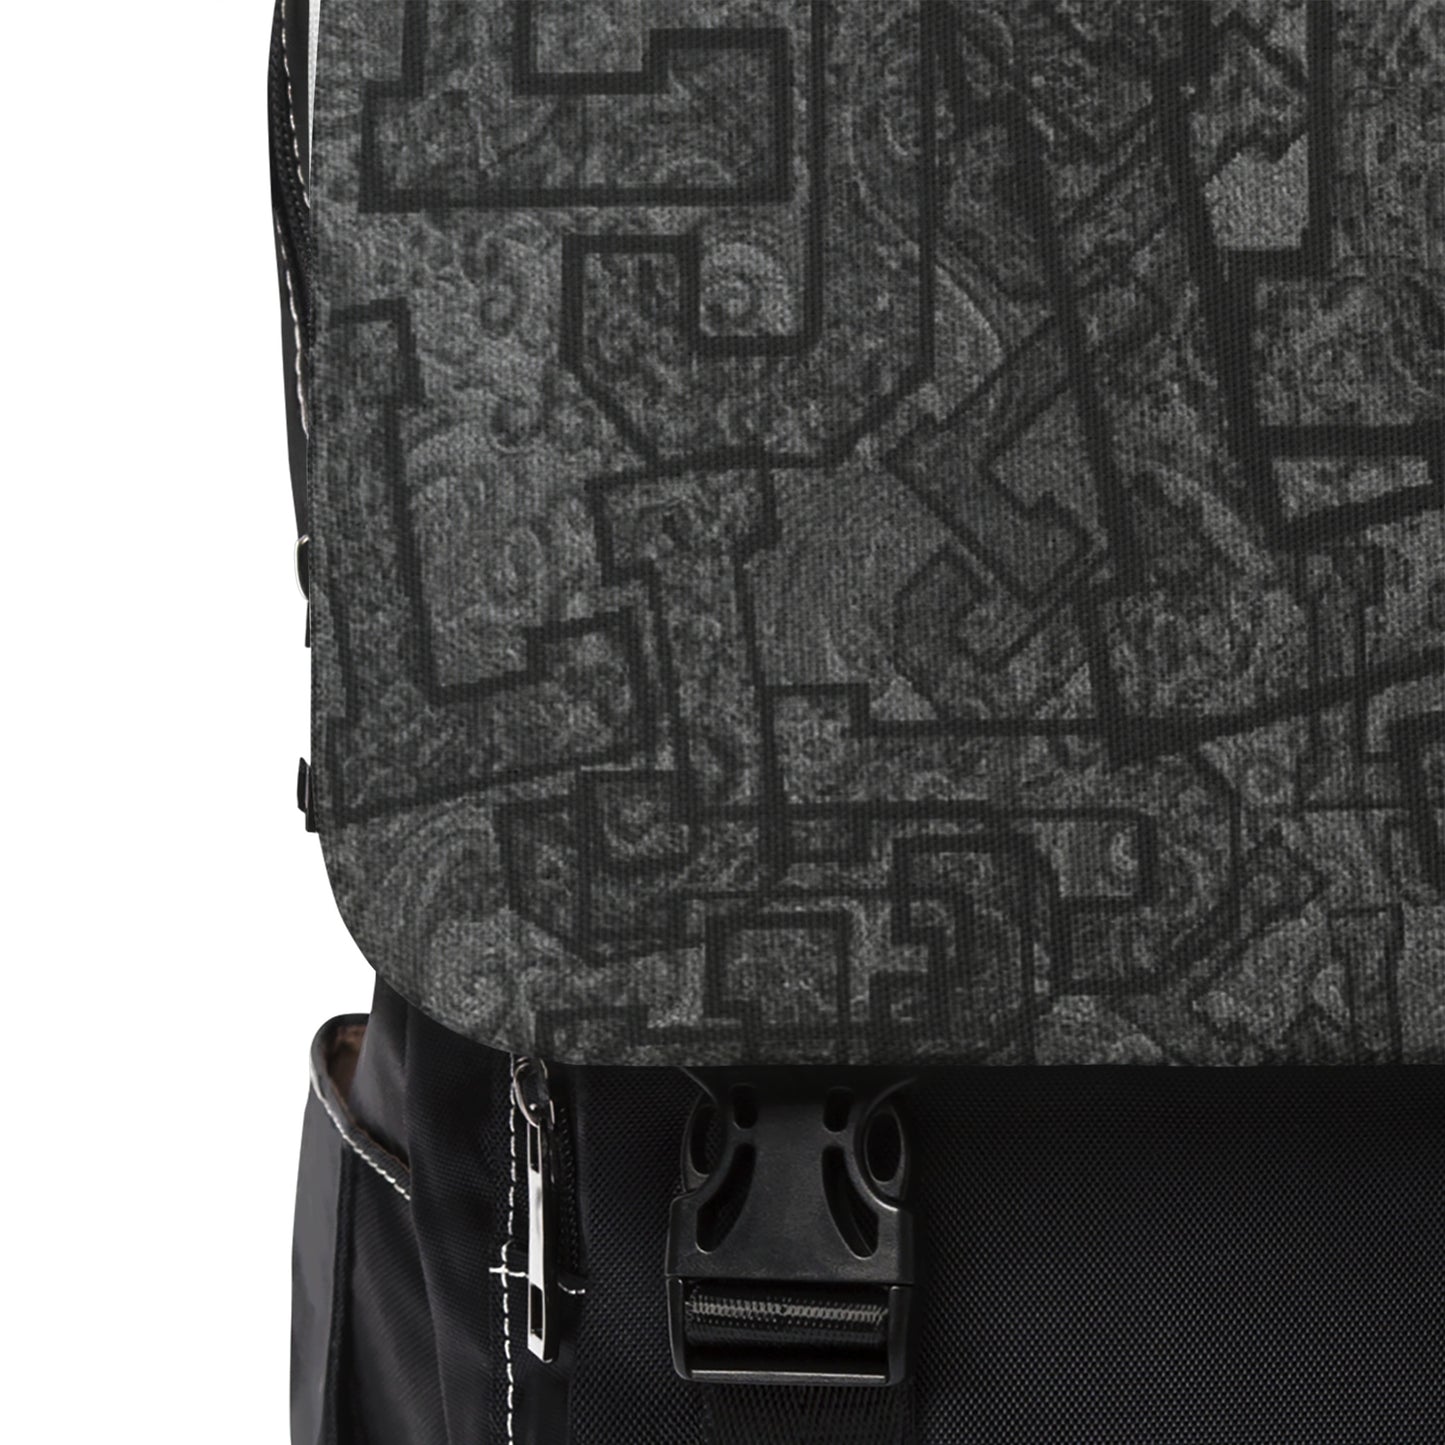 Elevated Basic Pattern Backpack